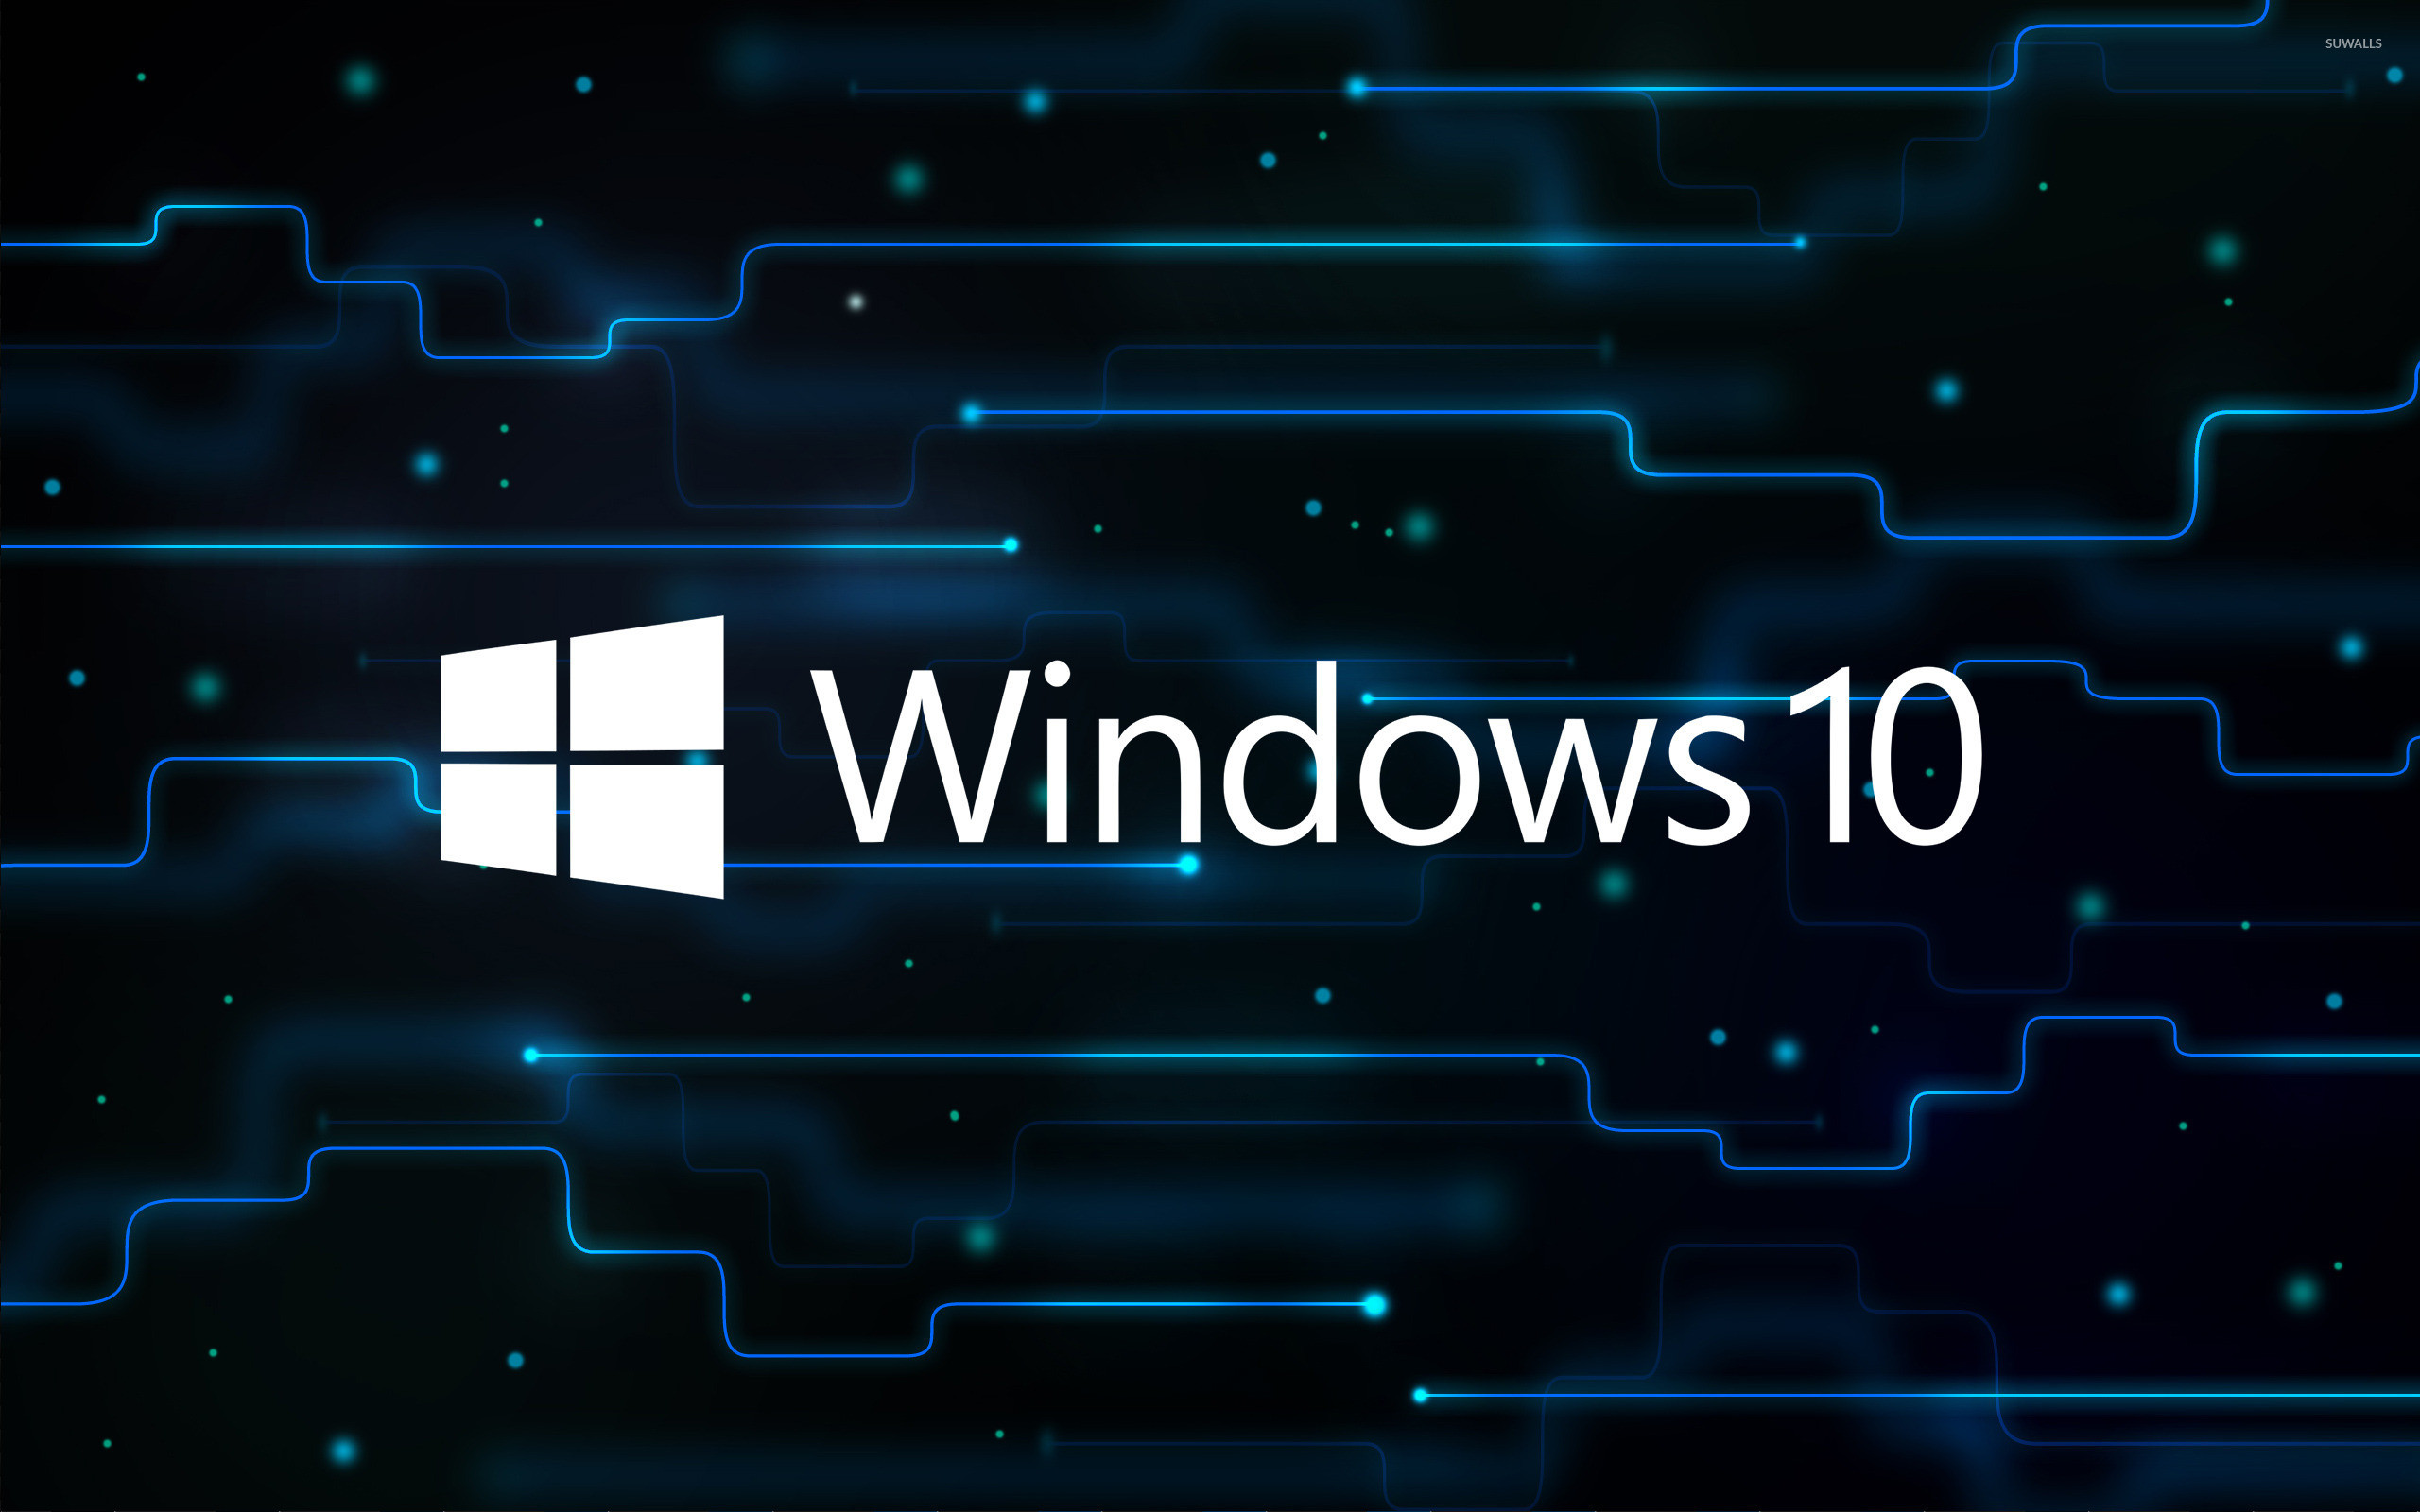 2560x1600 Windows 10 white text logo on a network wallpaper  jpg